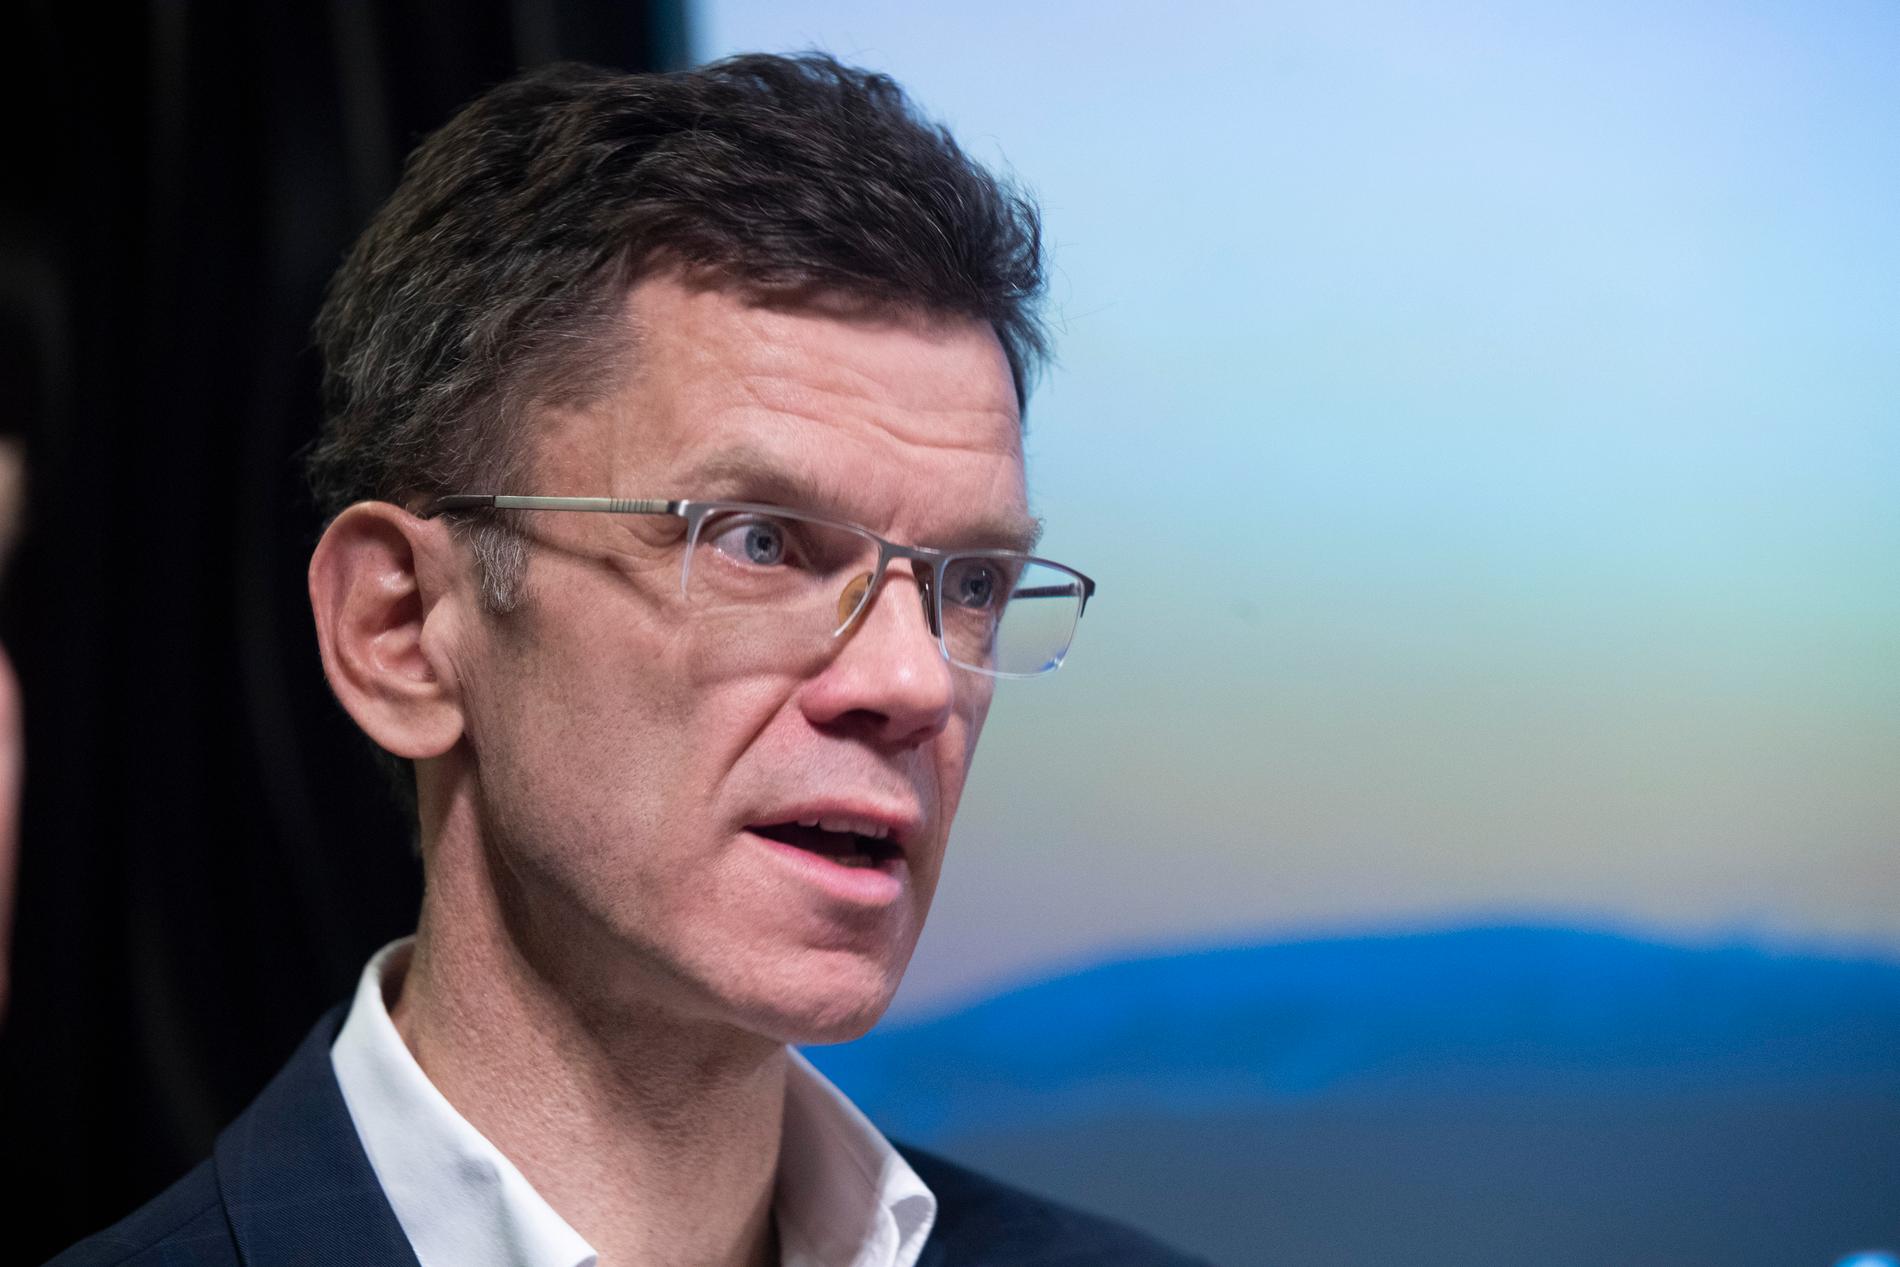 Telenor Chairman Petter-Børre Furberg will be the new CEO of Posten – E24